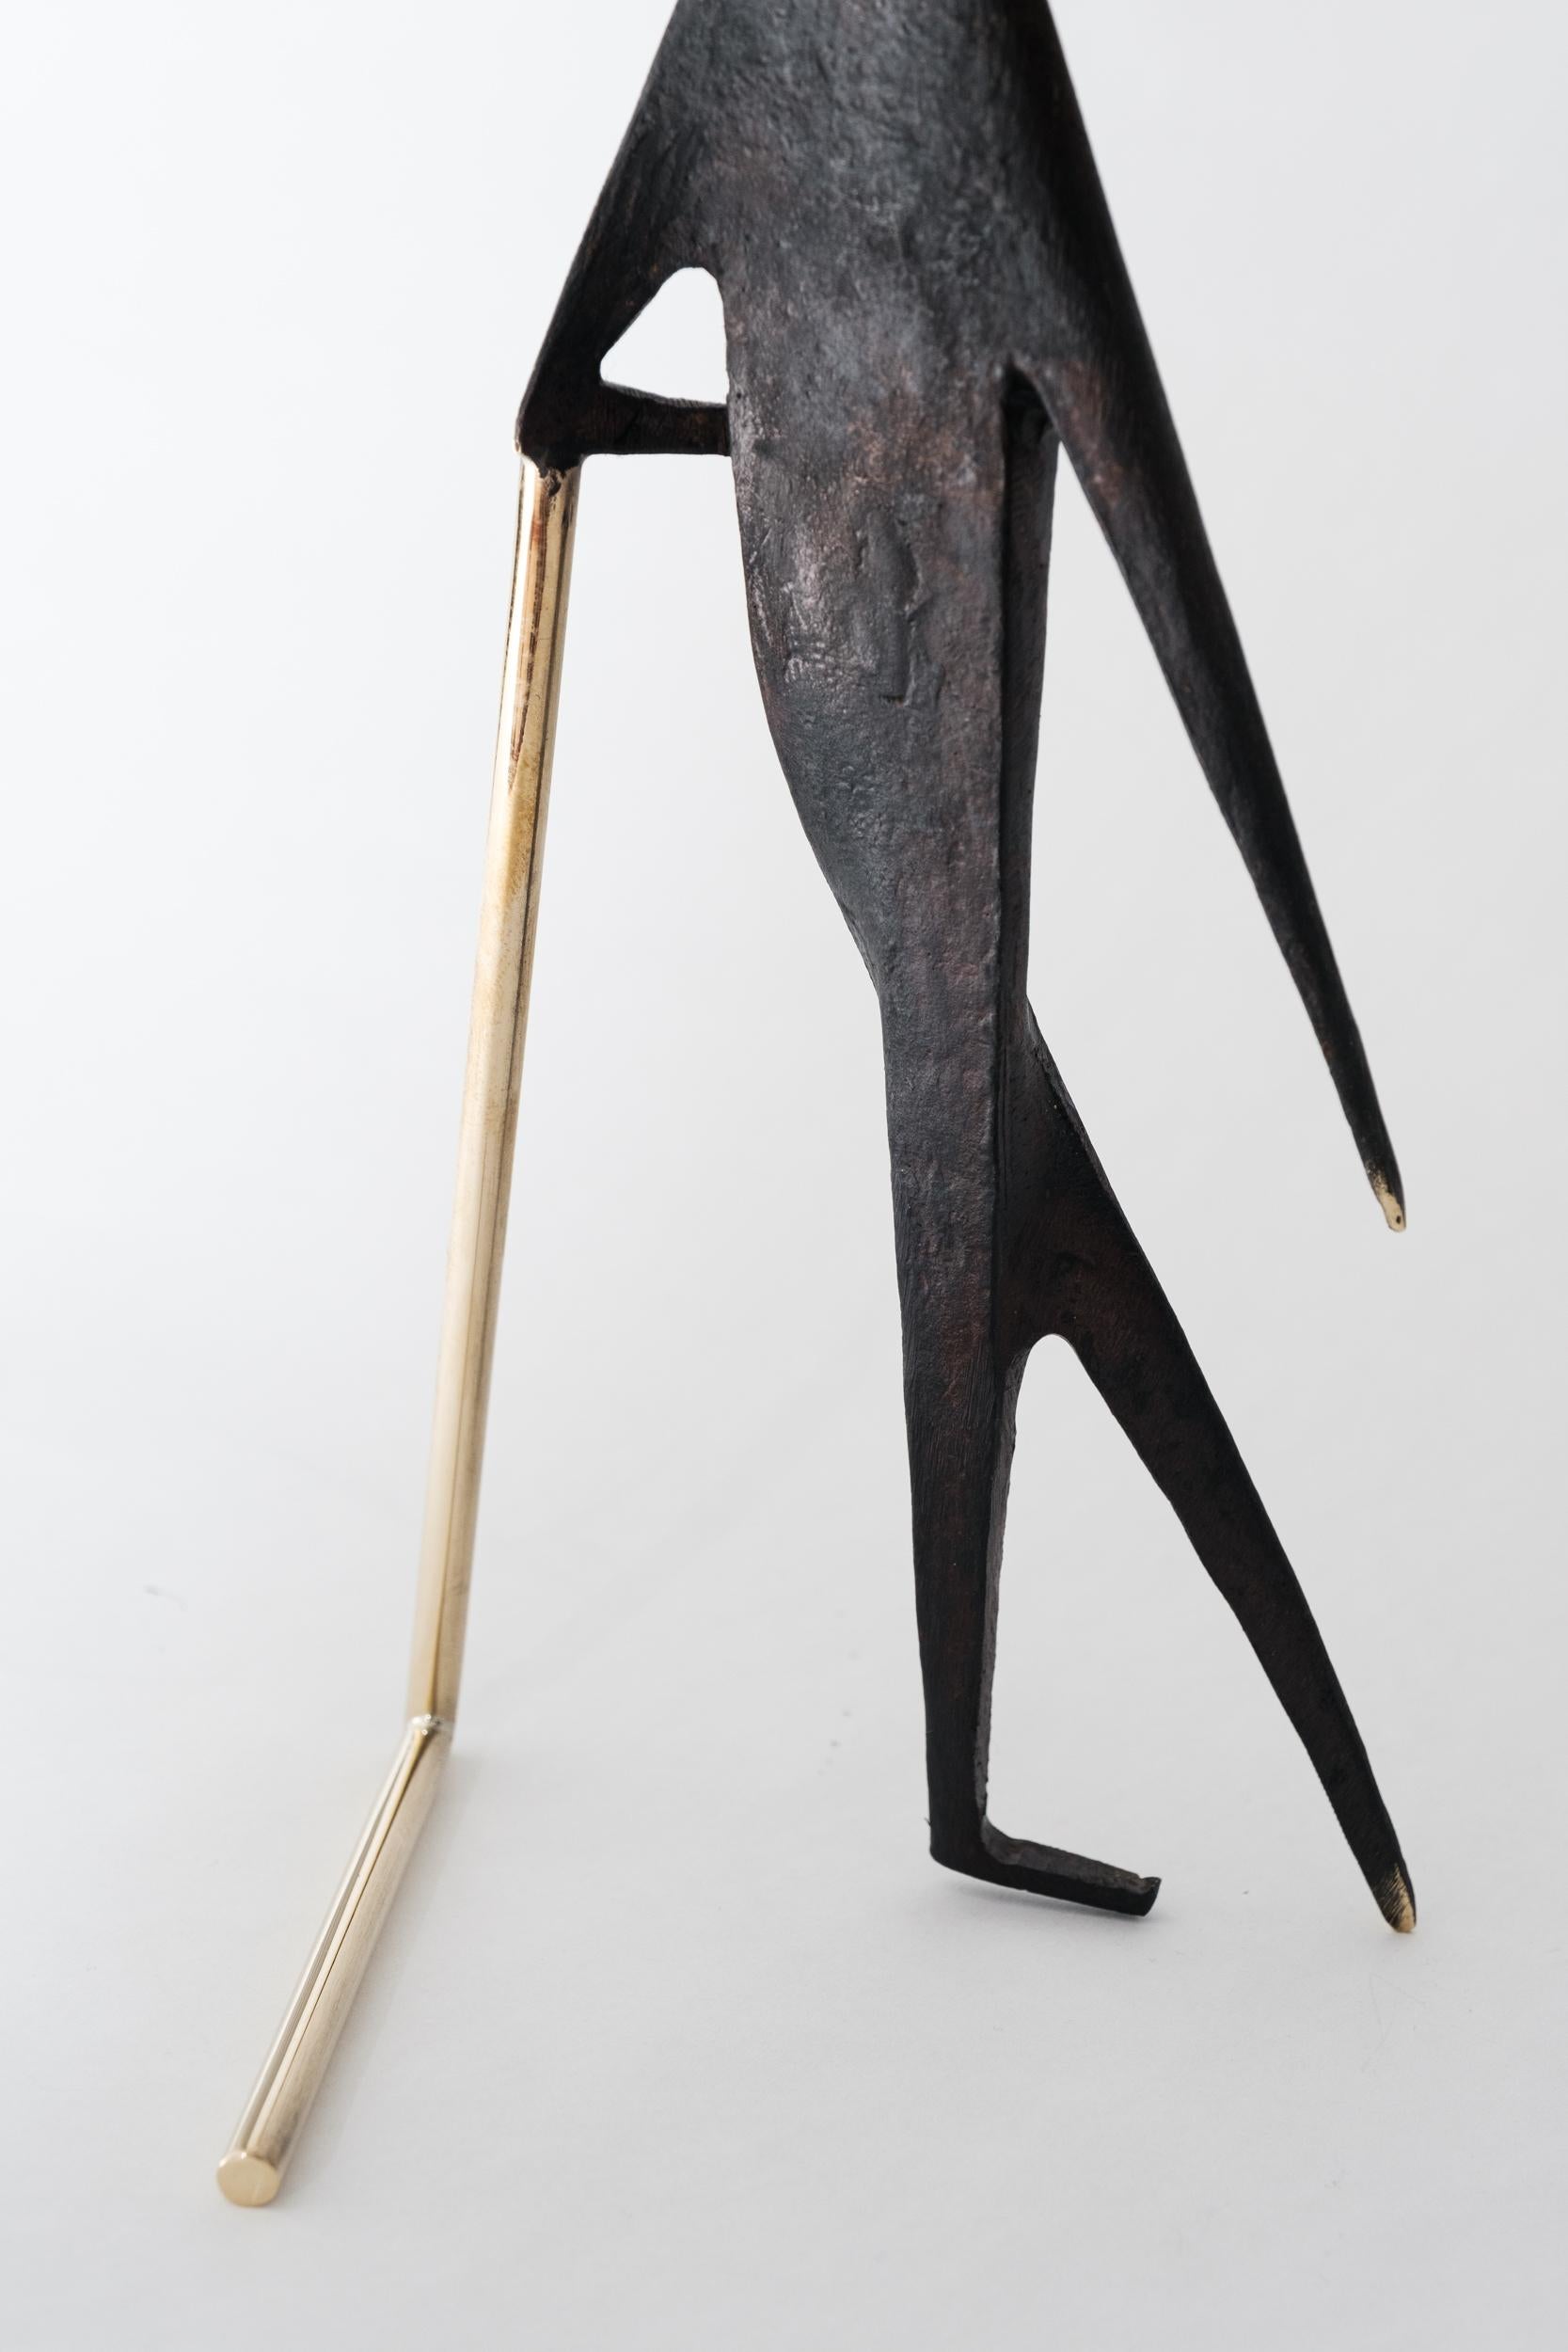 Carl Auböck Model #4060 'Man with Stick' Brass Sculpture For Sale 4